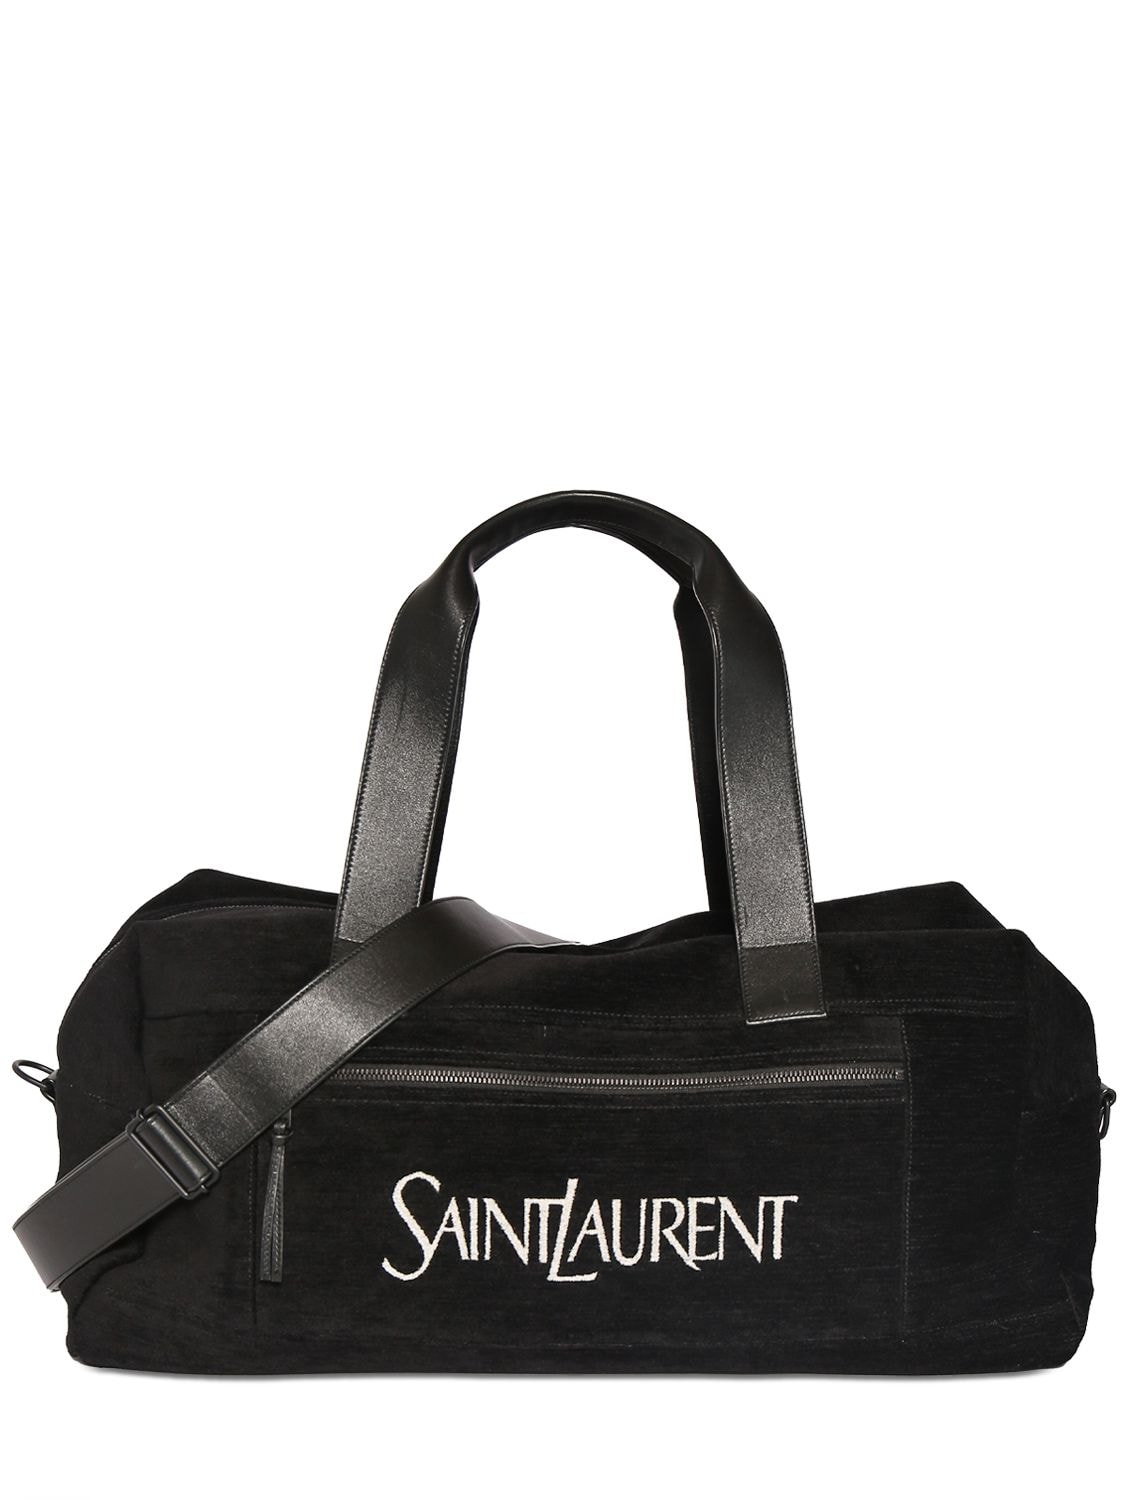 Saint Laurent Leather Duffle Bag In Black